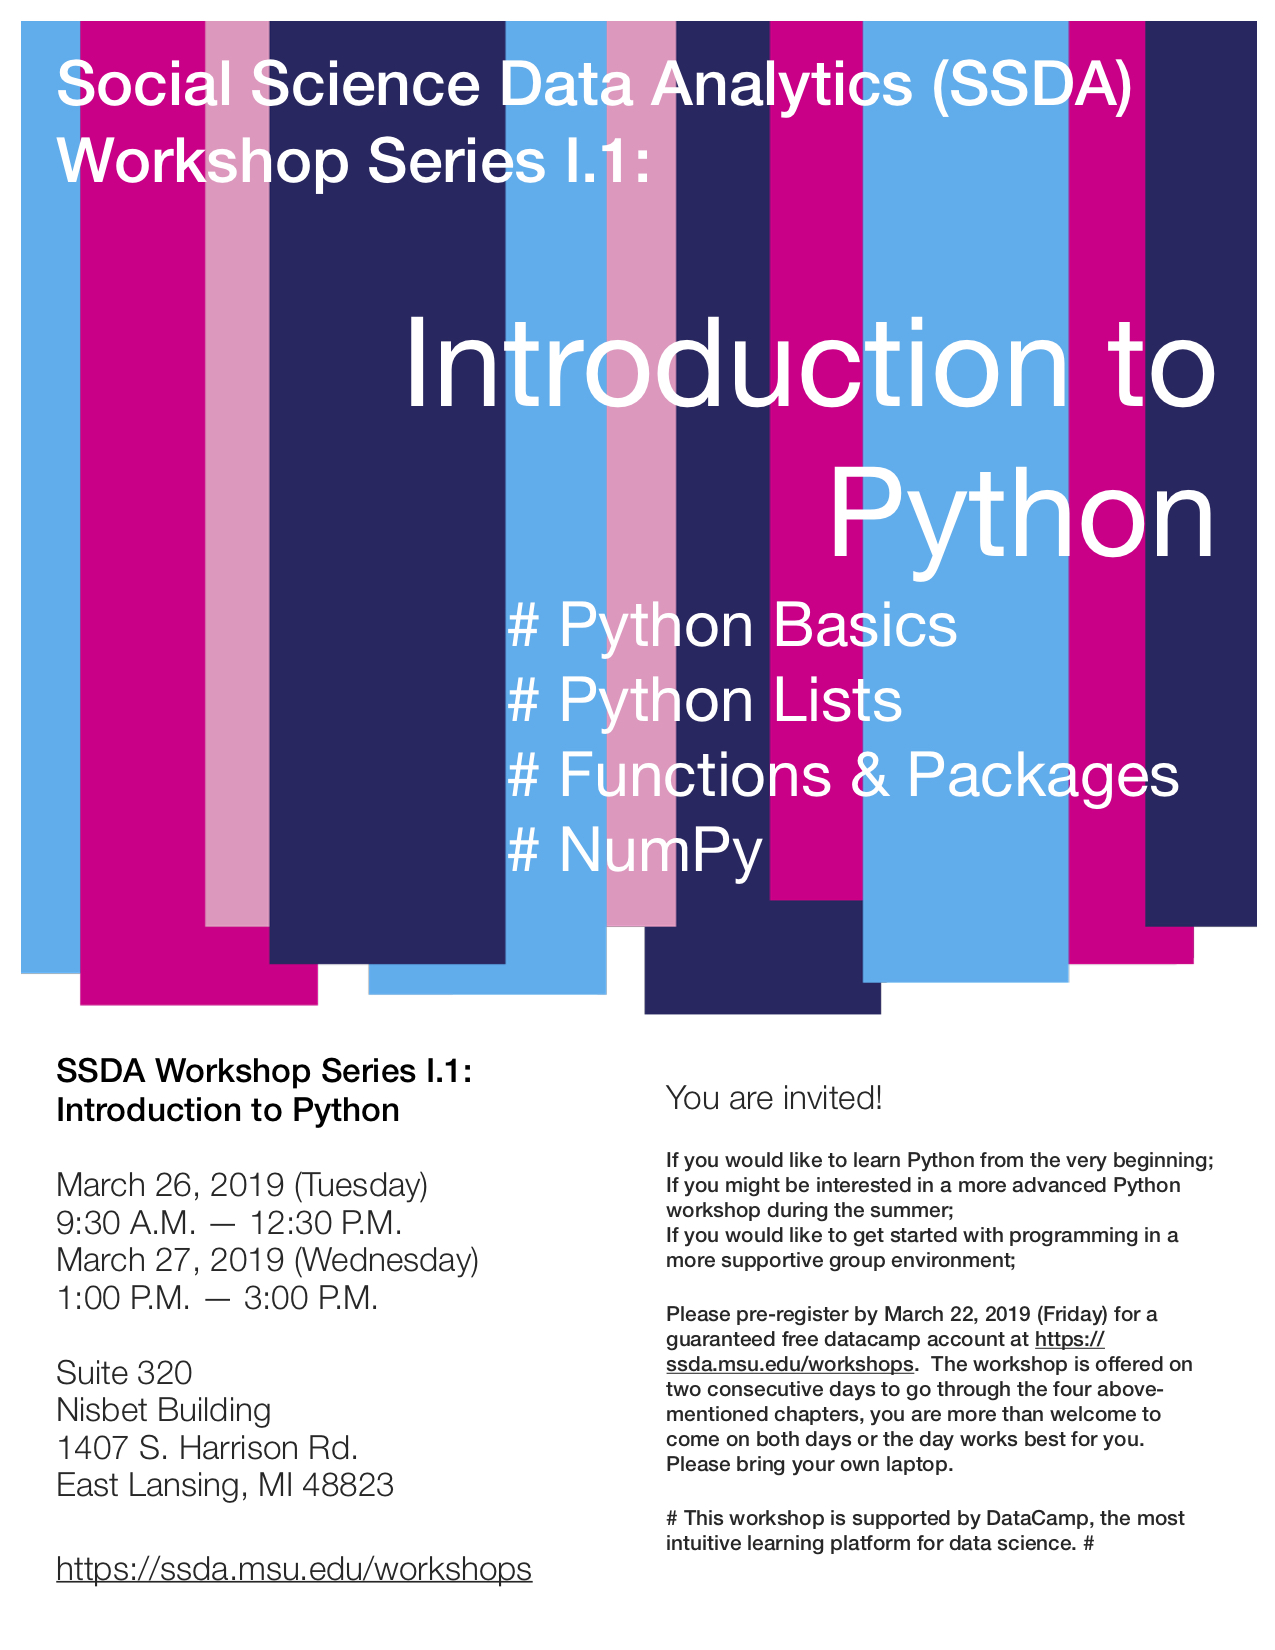 SSDA workshop flyer -- Introduction to Python